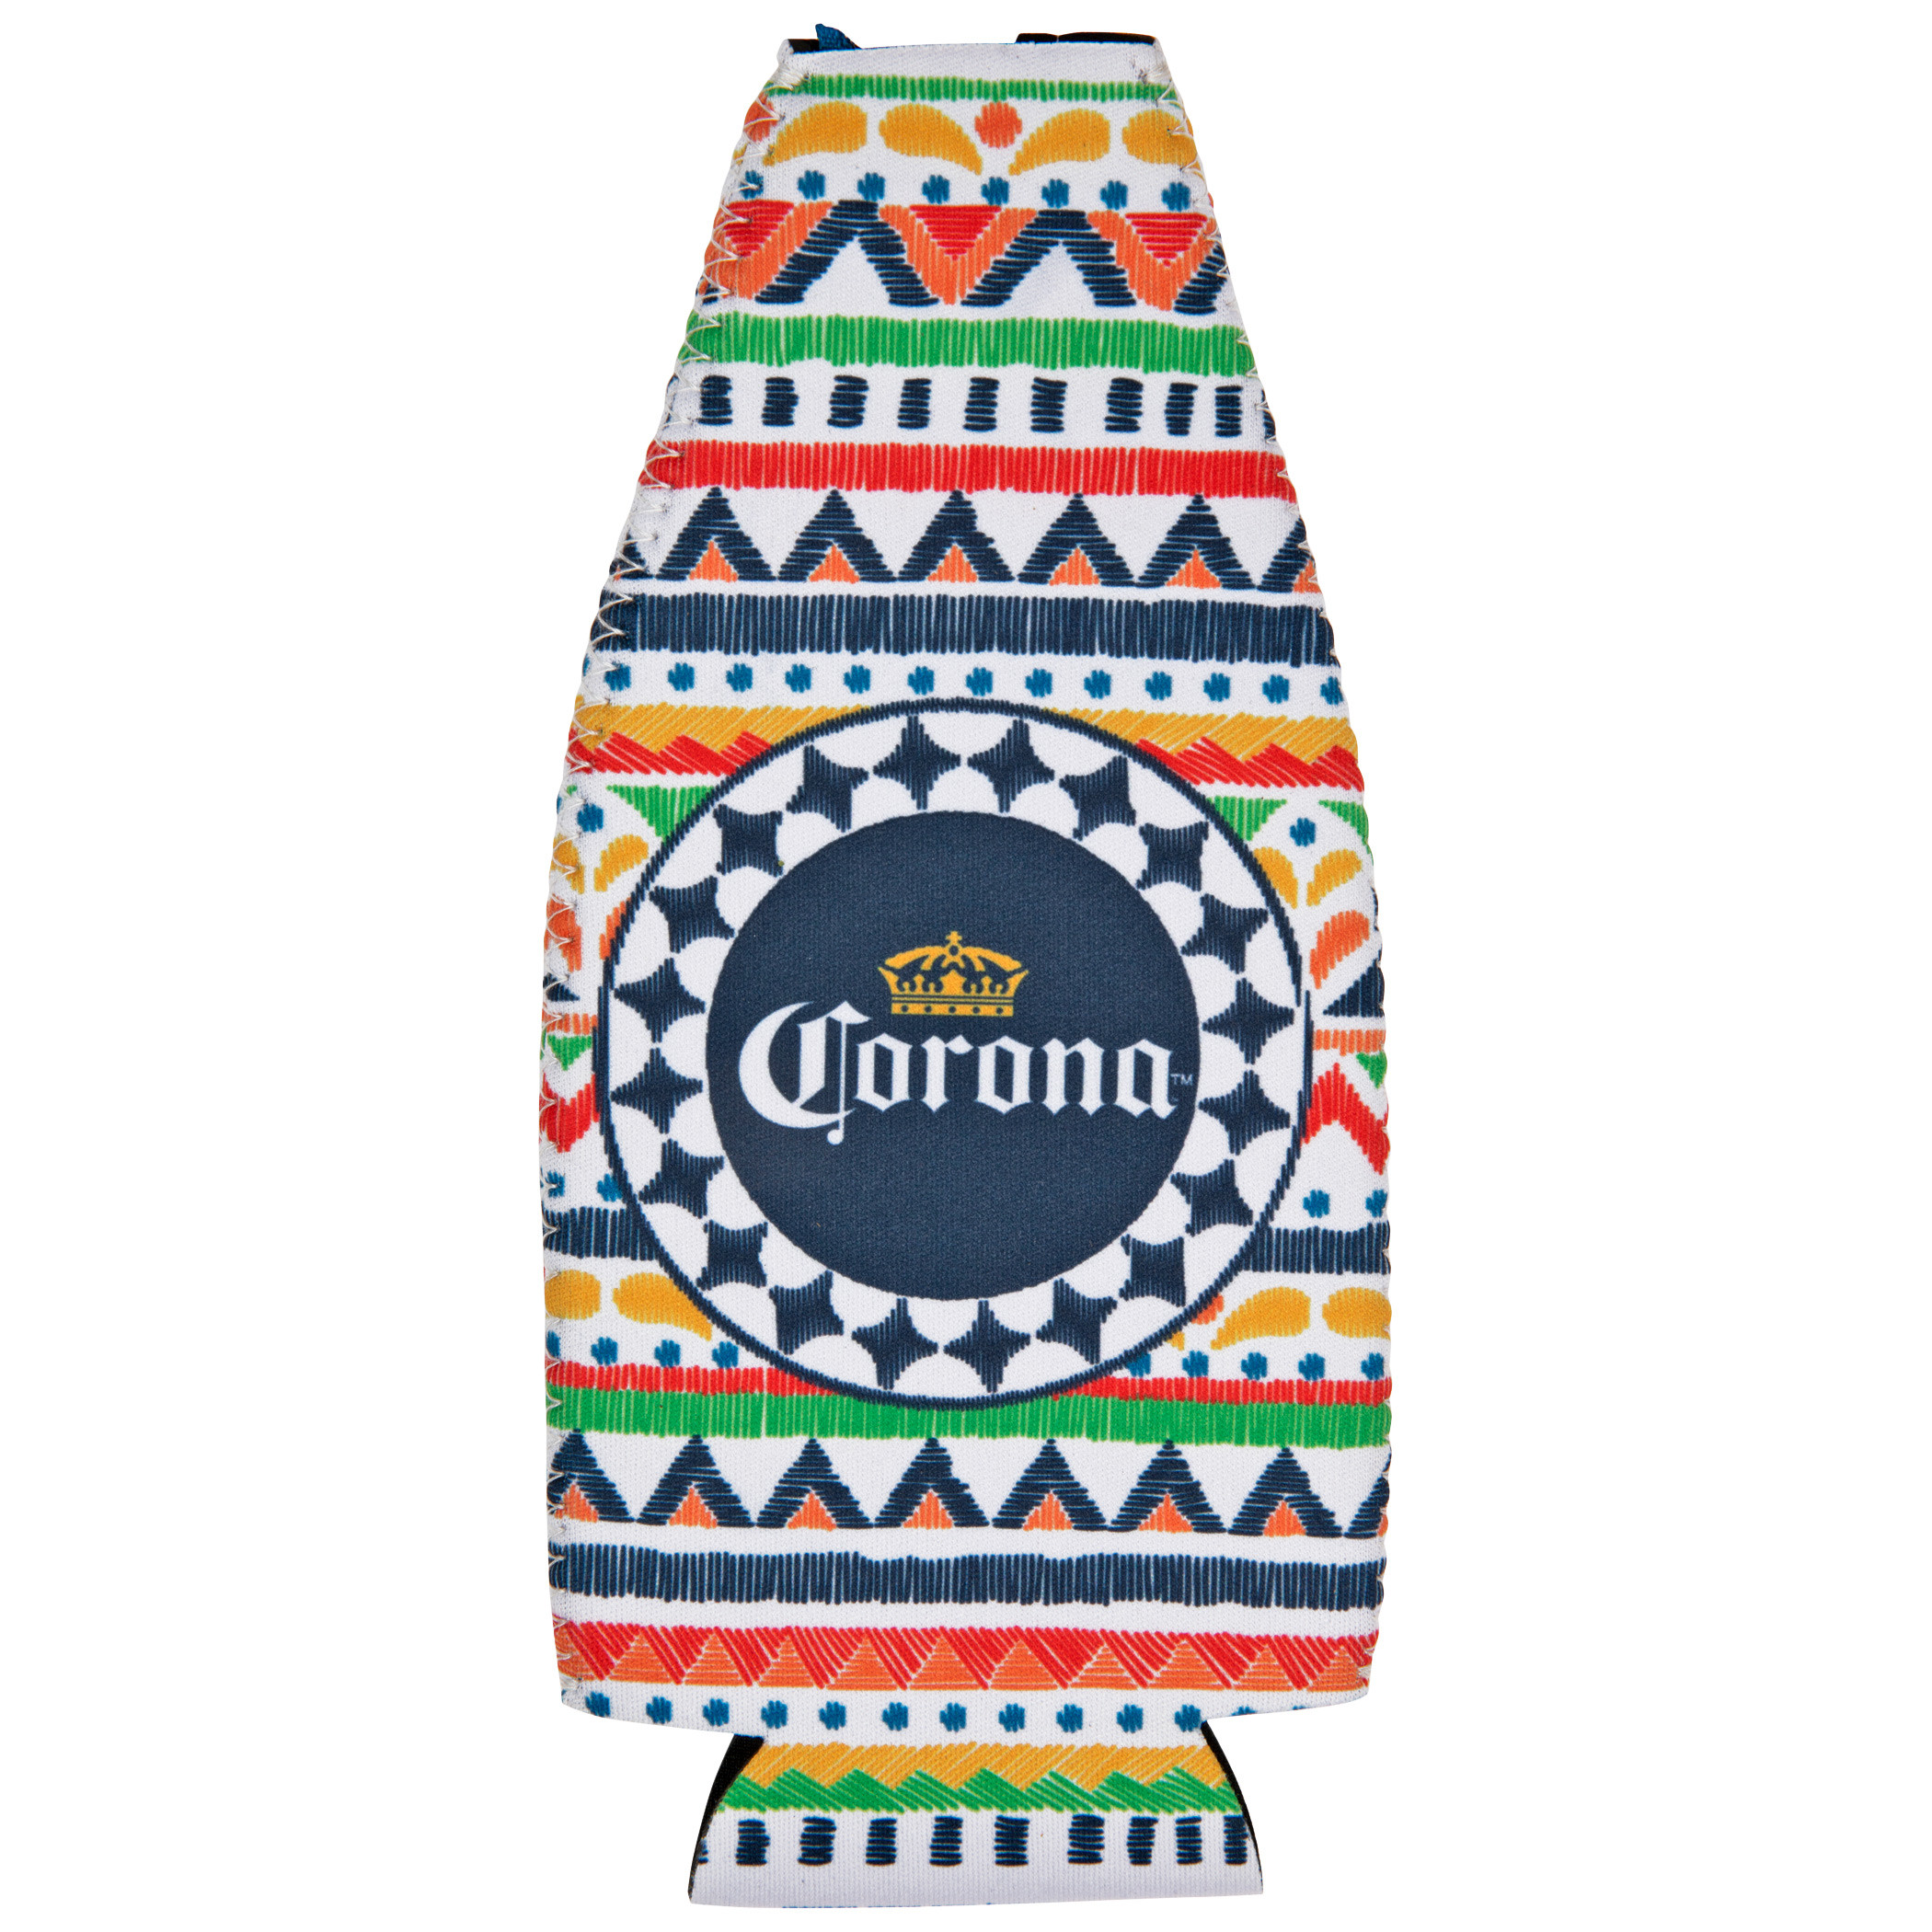 Corona Extra Colorful Bottle Cooler